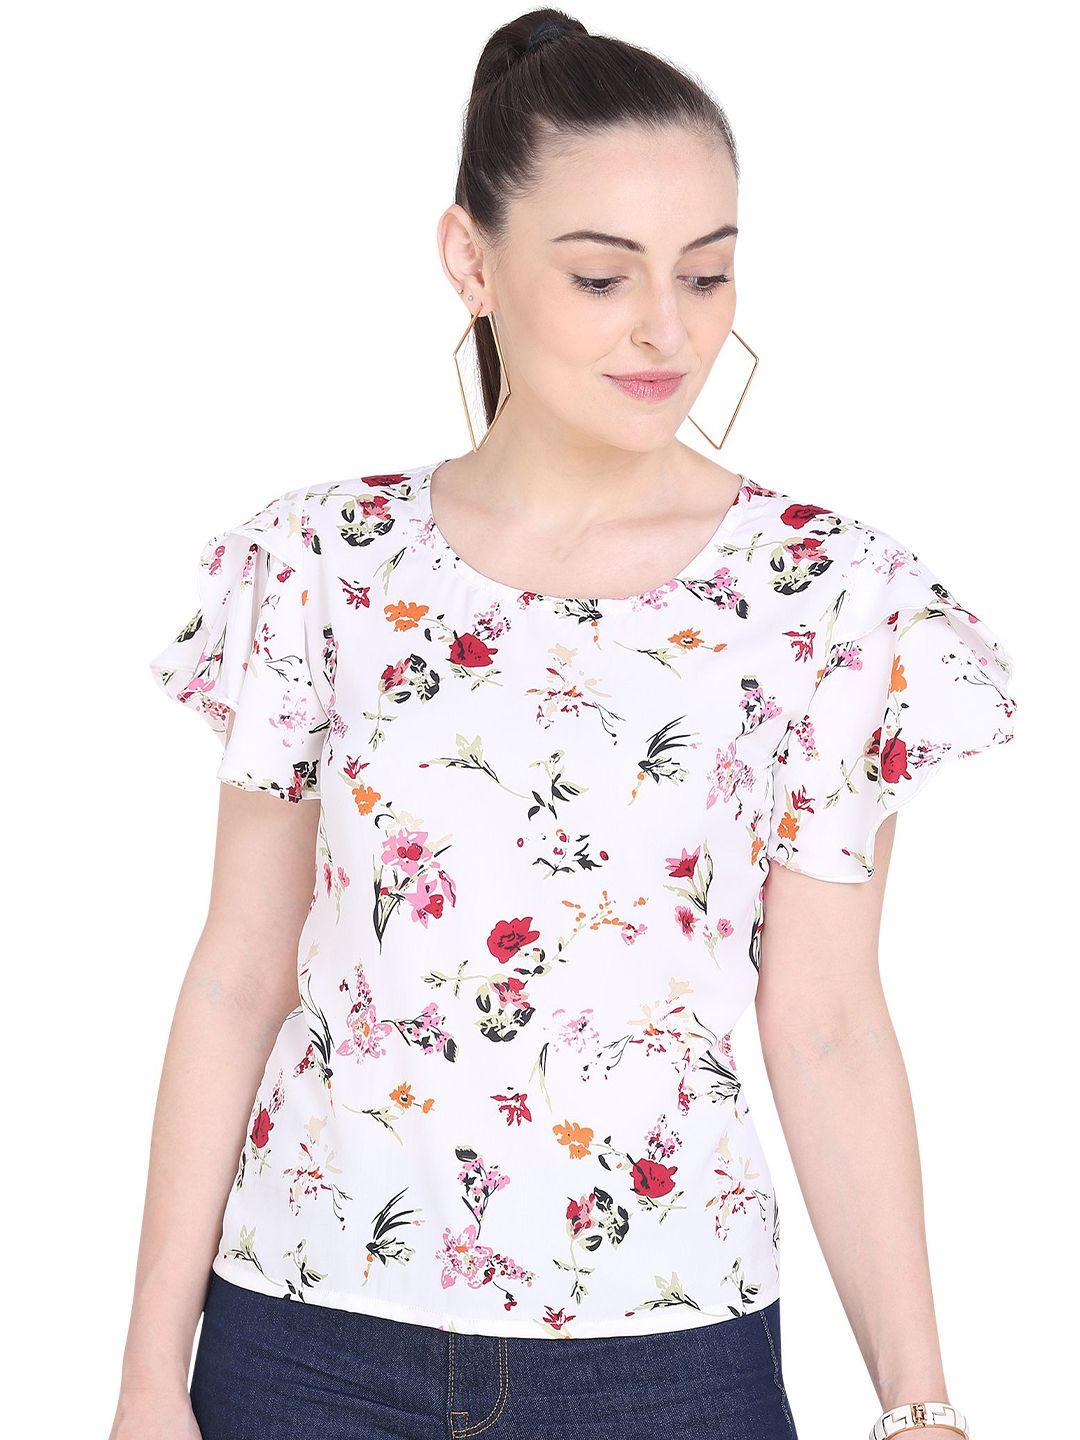 oomph! floral printed flutter sleeves top